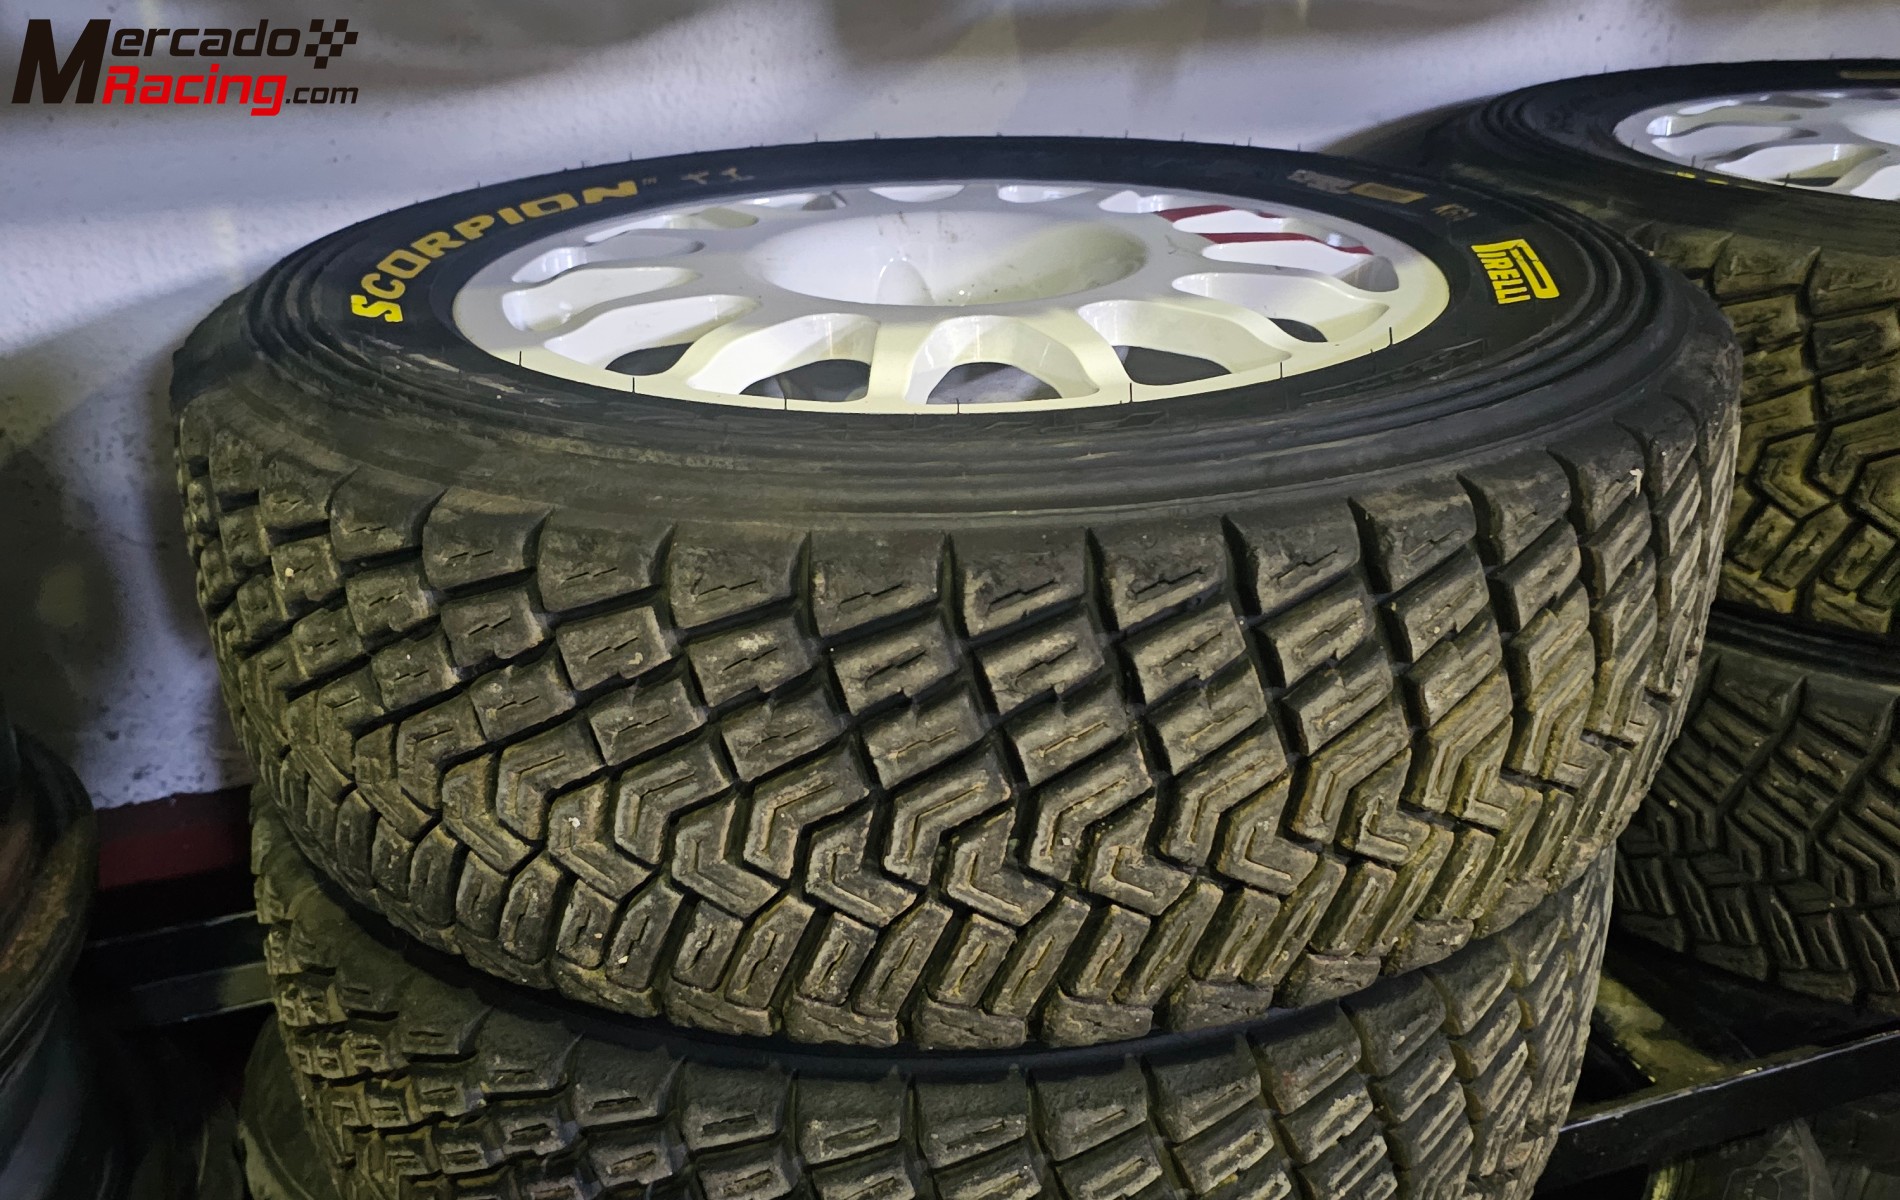   neumáticos pirelli k6a de tierra